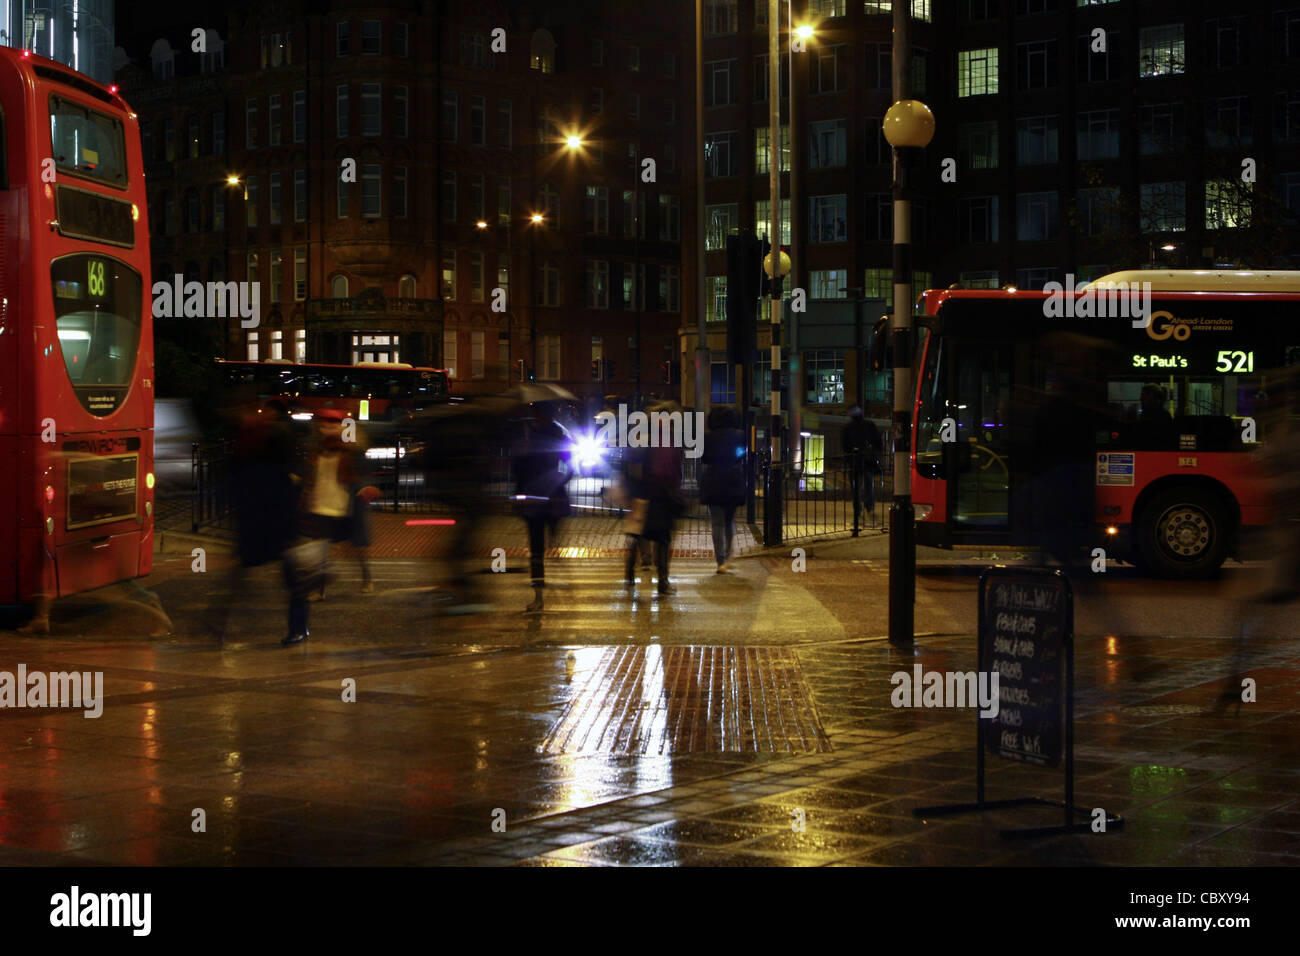 An evening shot at Tennison Way, Waterloo,  London showing people walking and traffic passing Stock Photo